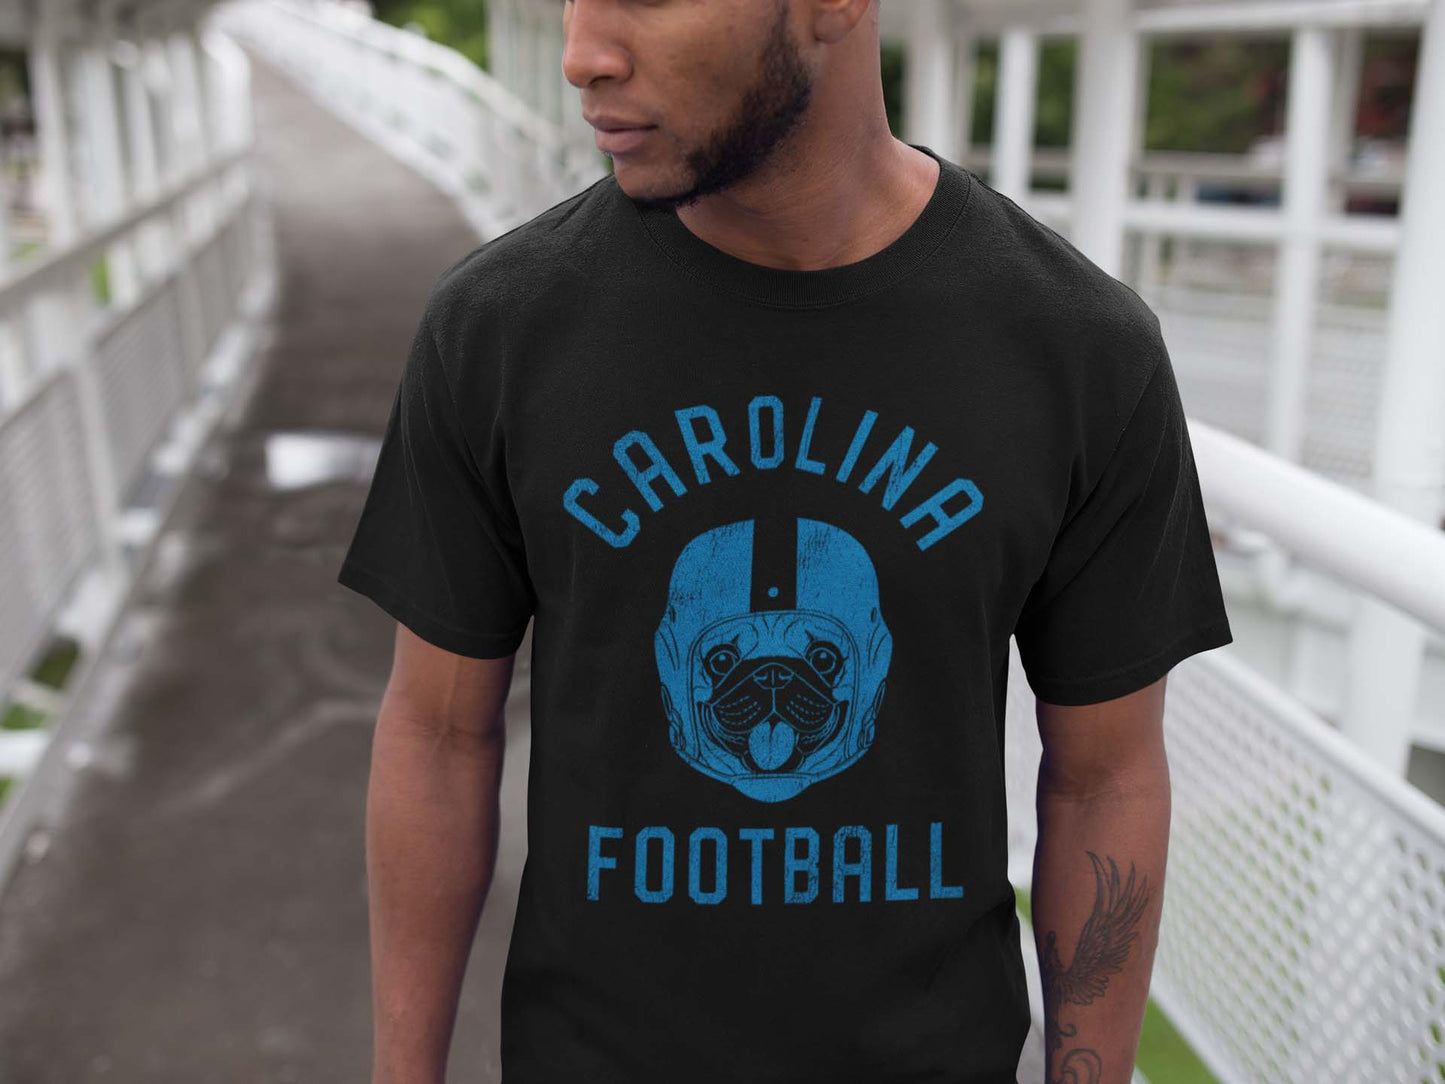 Carolina Football Pug T-Shirt